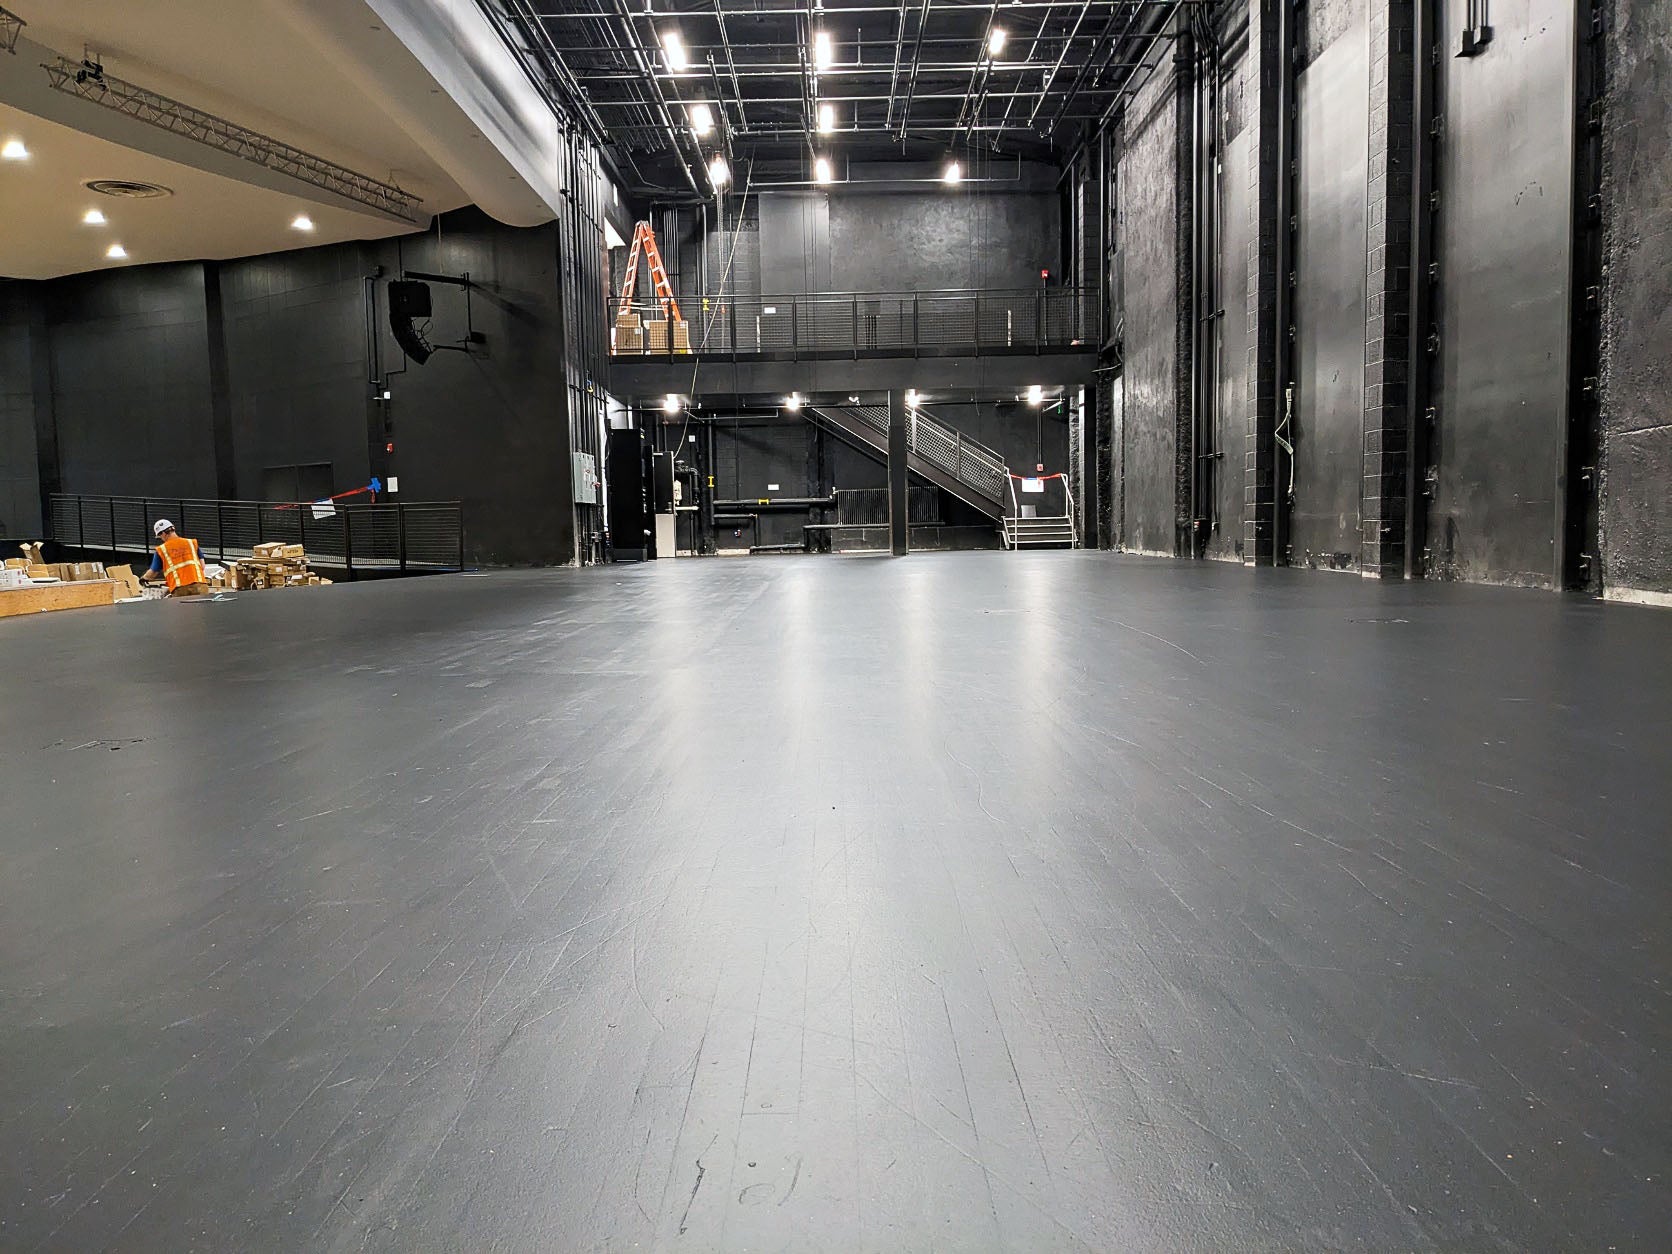 a black floor has black walls and theatre rigging lights above it